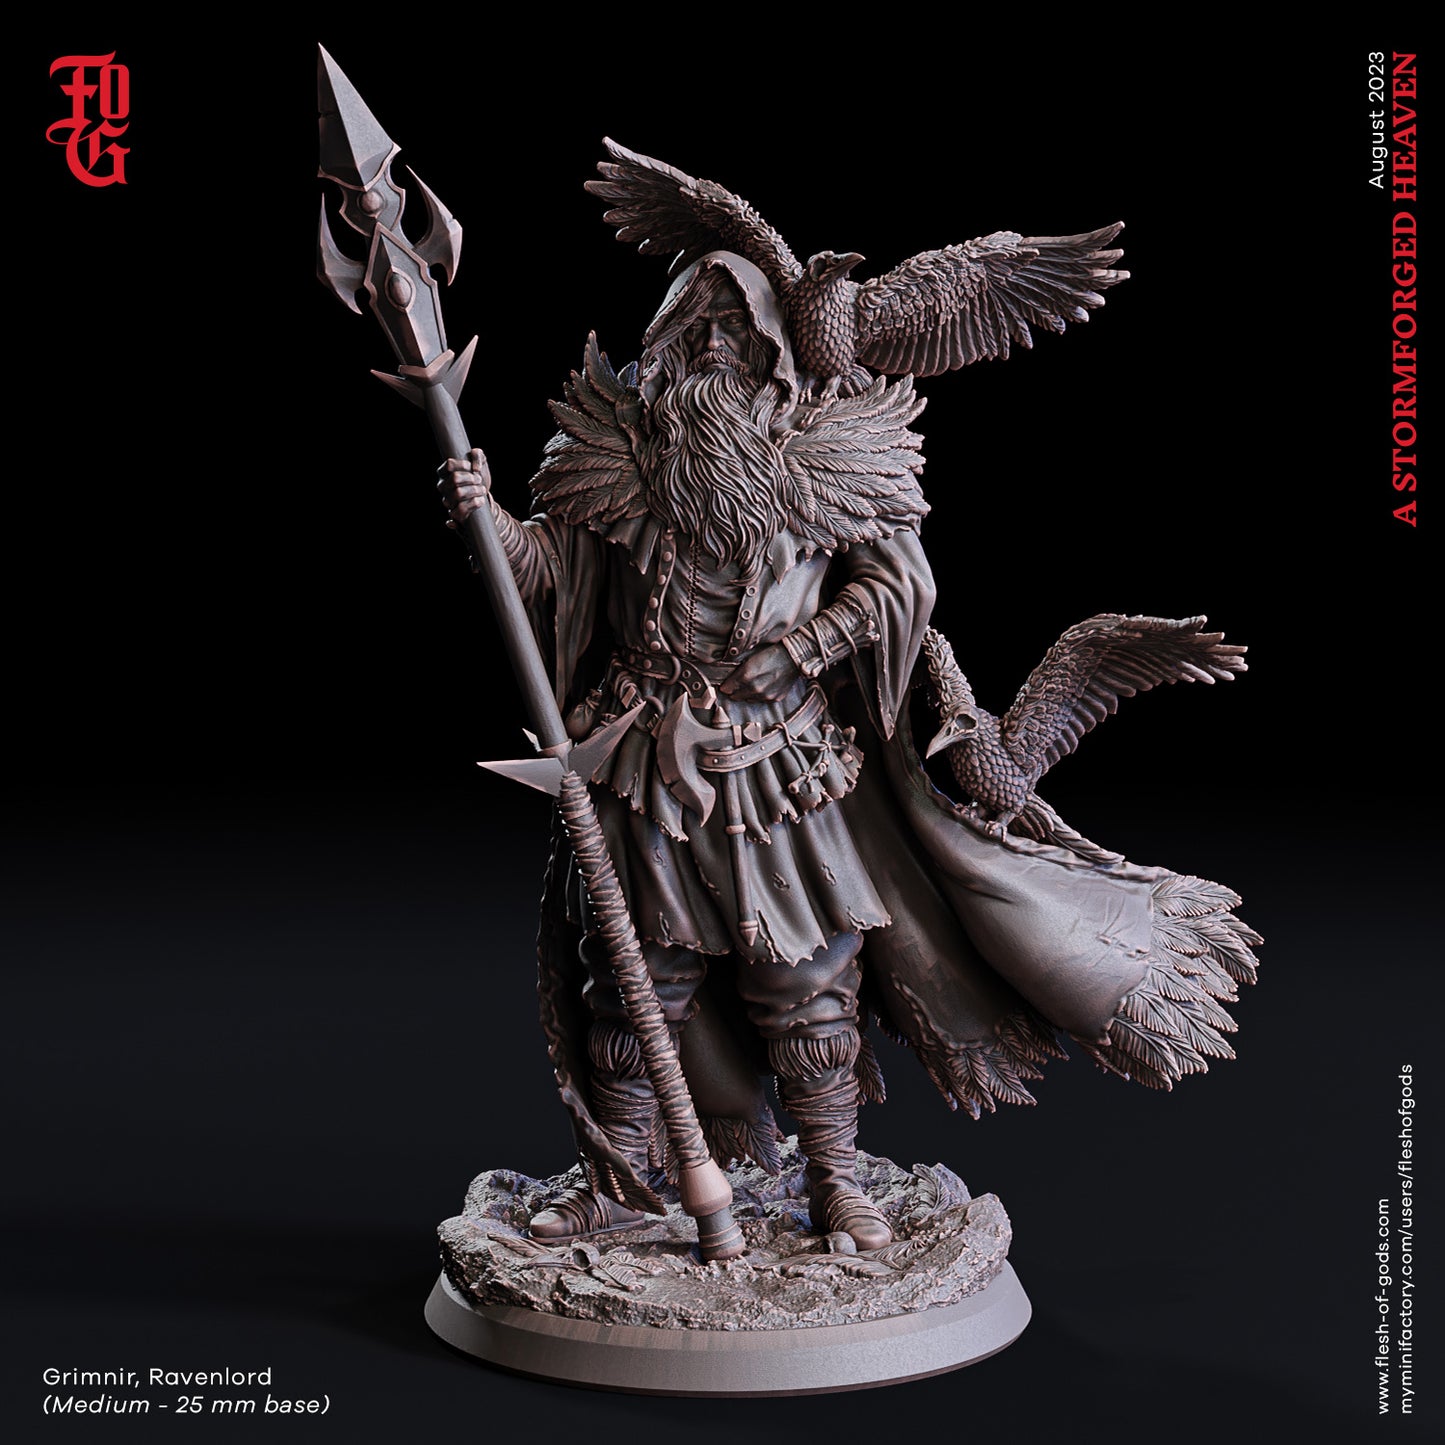 Grimnir Ravenlord Druide Miniatur | TableTop | Pathfinder | DnD | Flesh of Gods